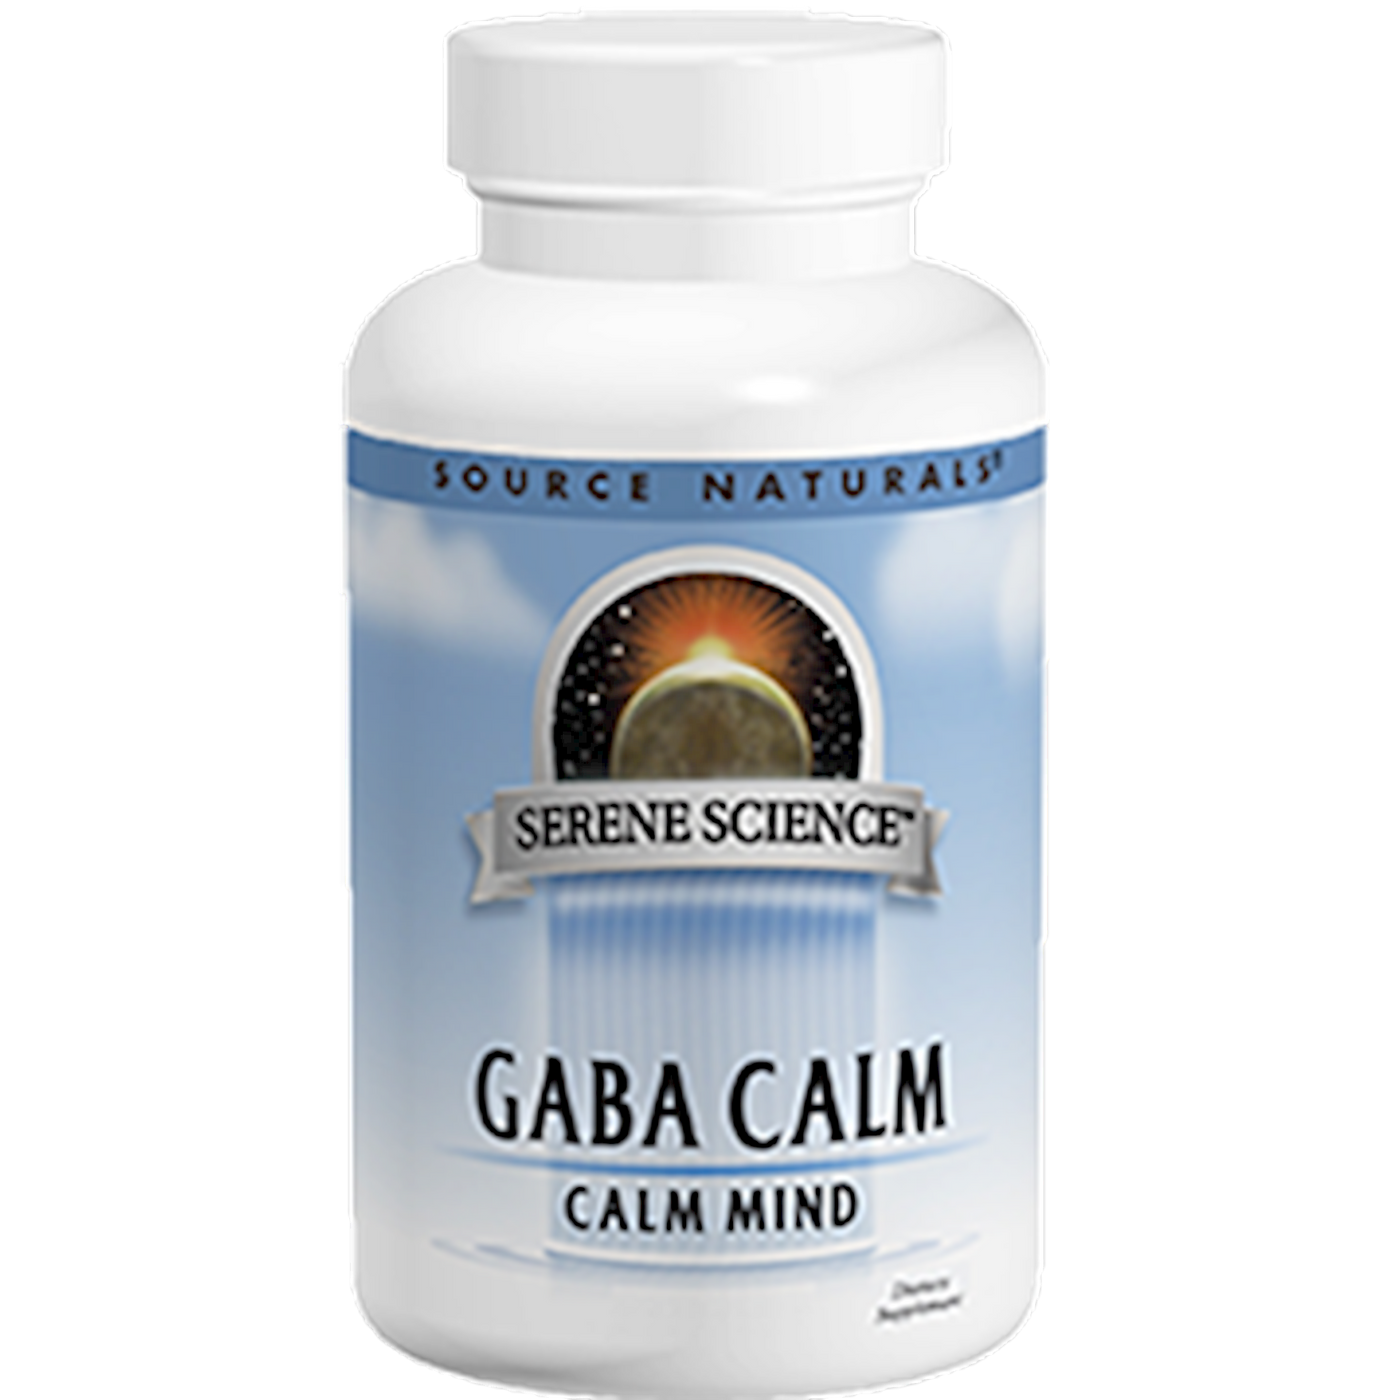 GABA Calm Orange enges Curated Wellness